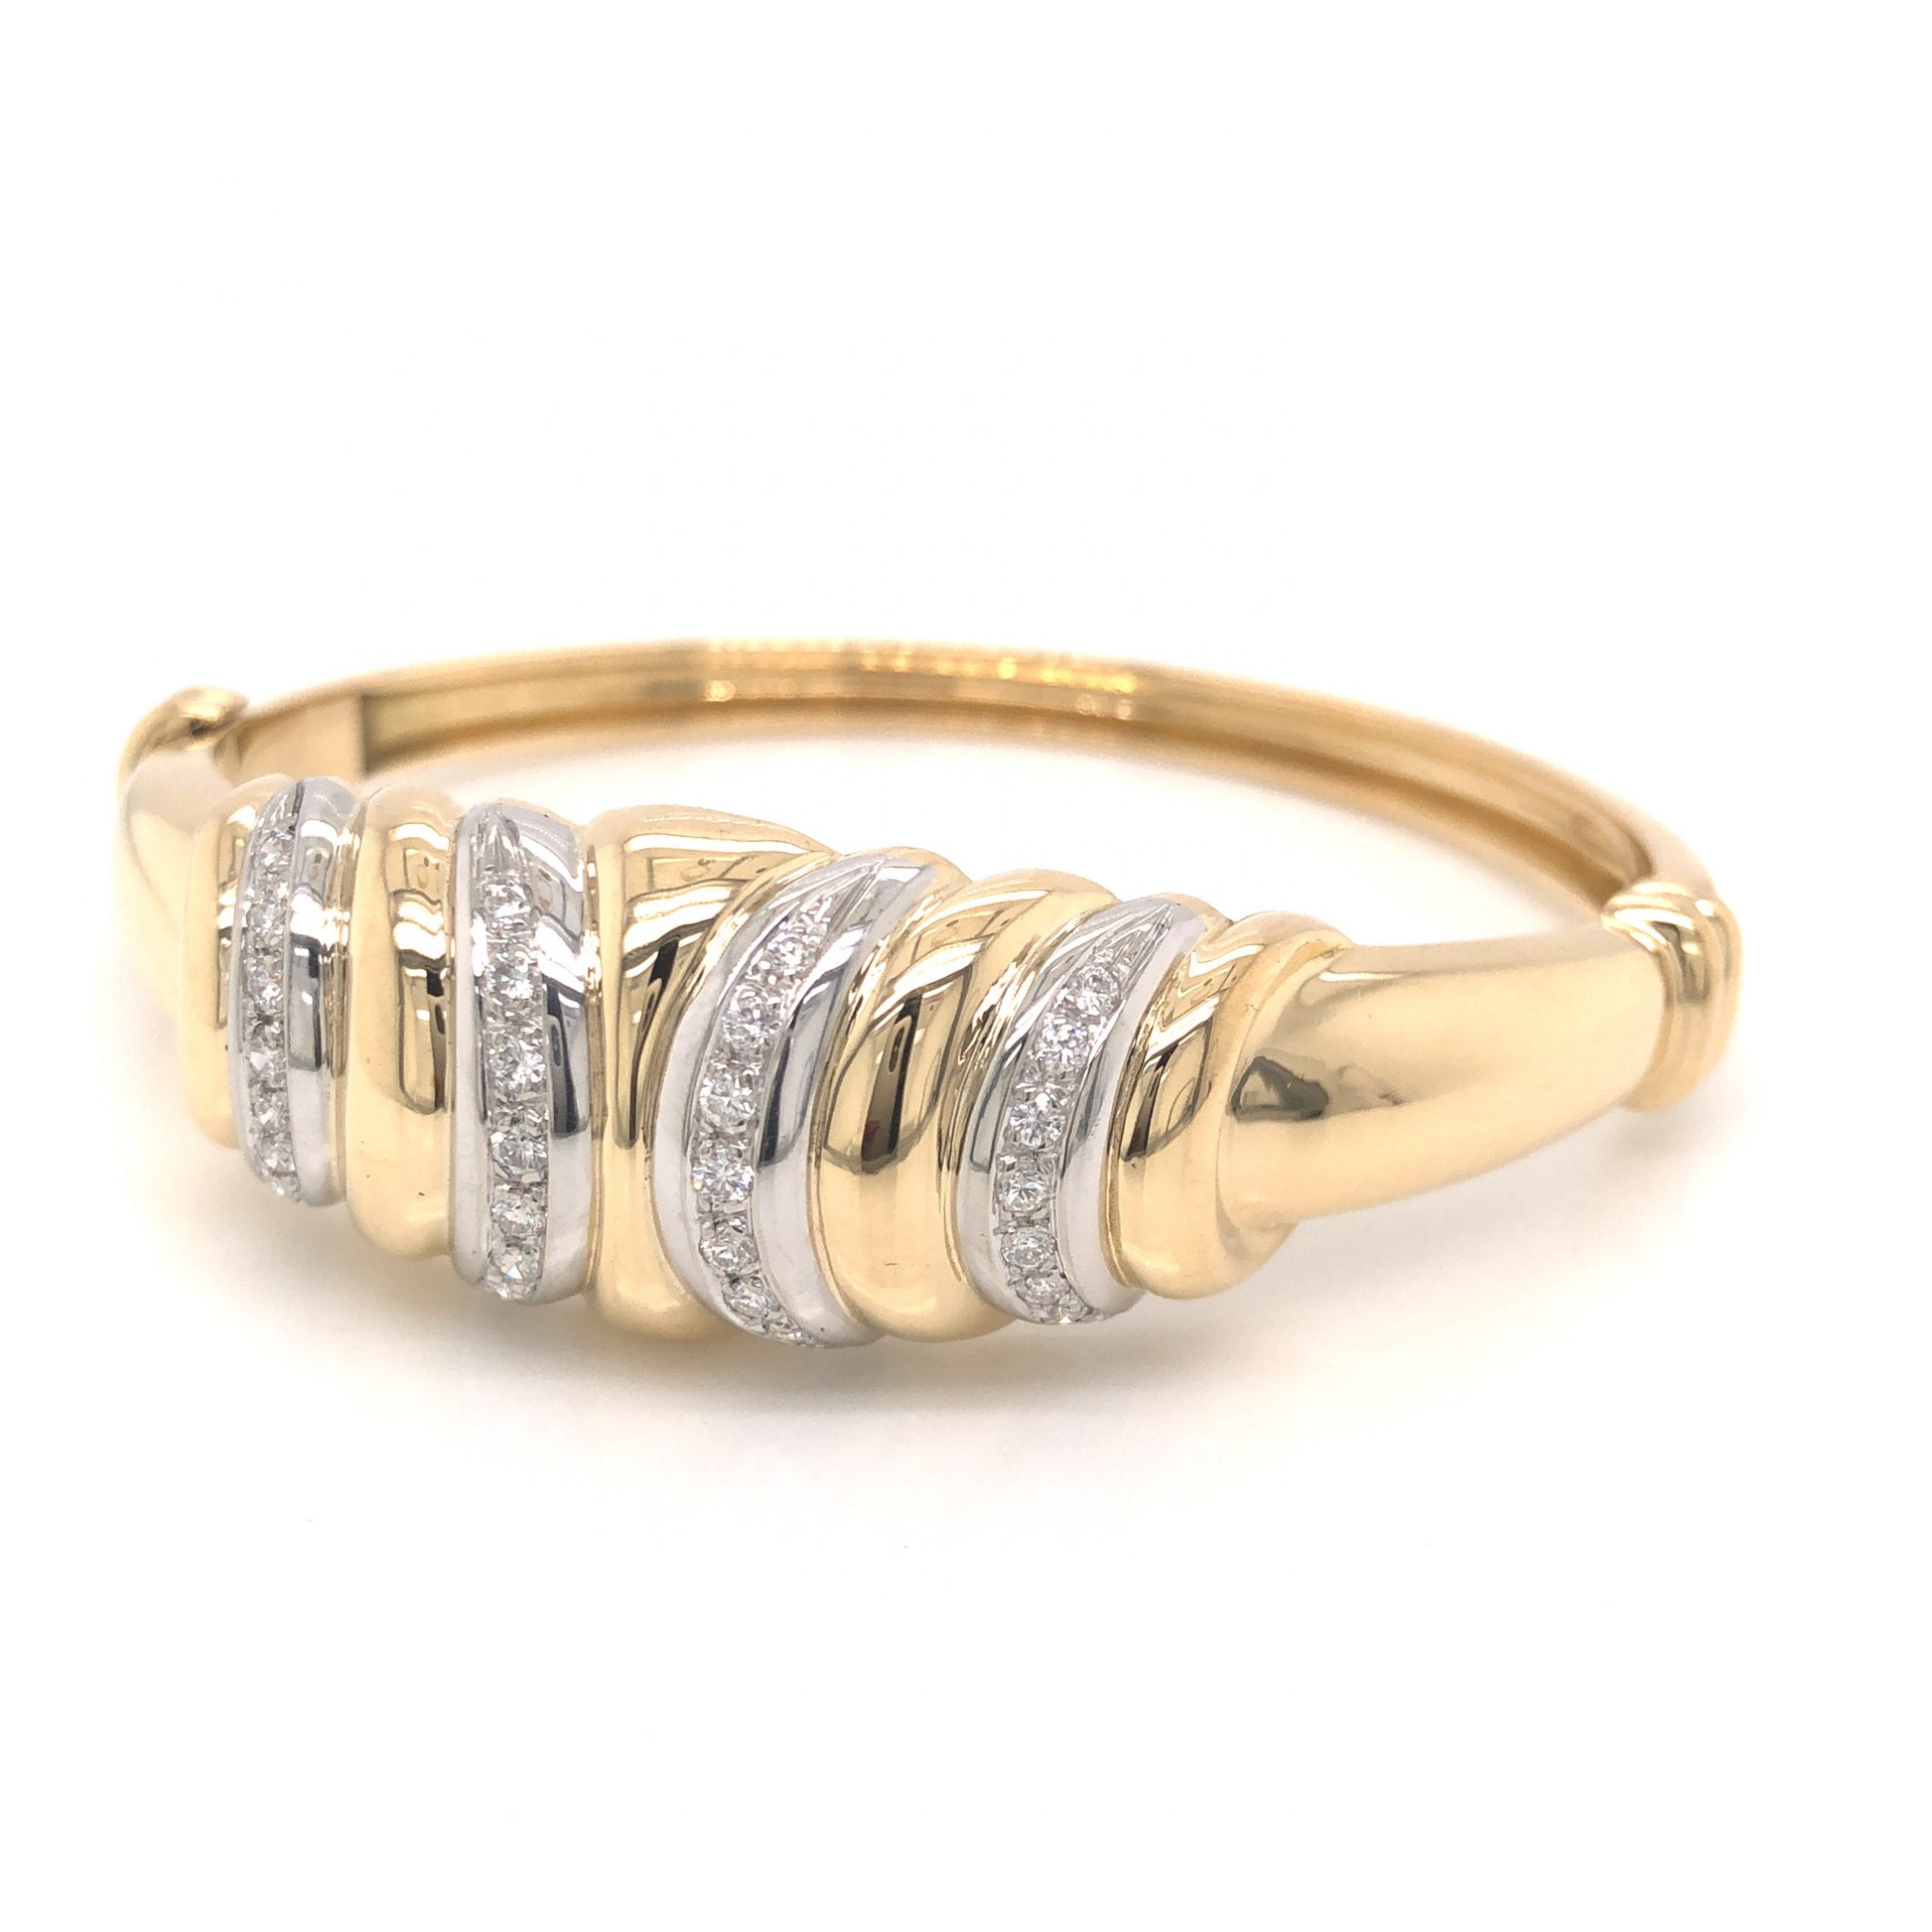 .56 Modern Diamond Bangle Bracelet in 18k GoldComposition: 18 Karat White Gold/18 Karat Yellow GoldTotal Diamond Weight: .56 ctTotal Gram Weight: 37.0 gInscription: 750